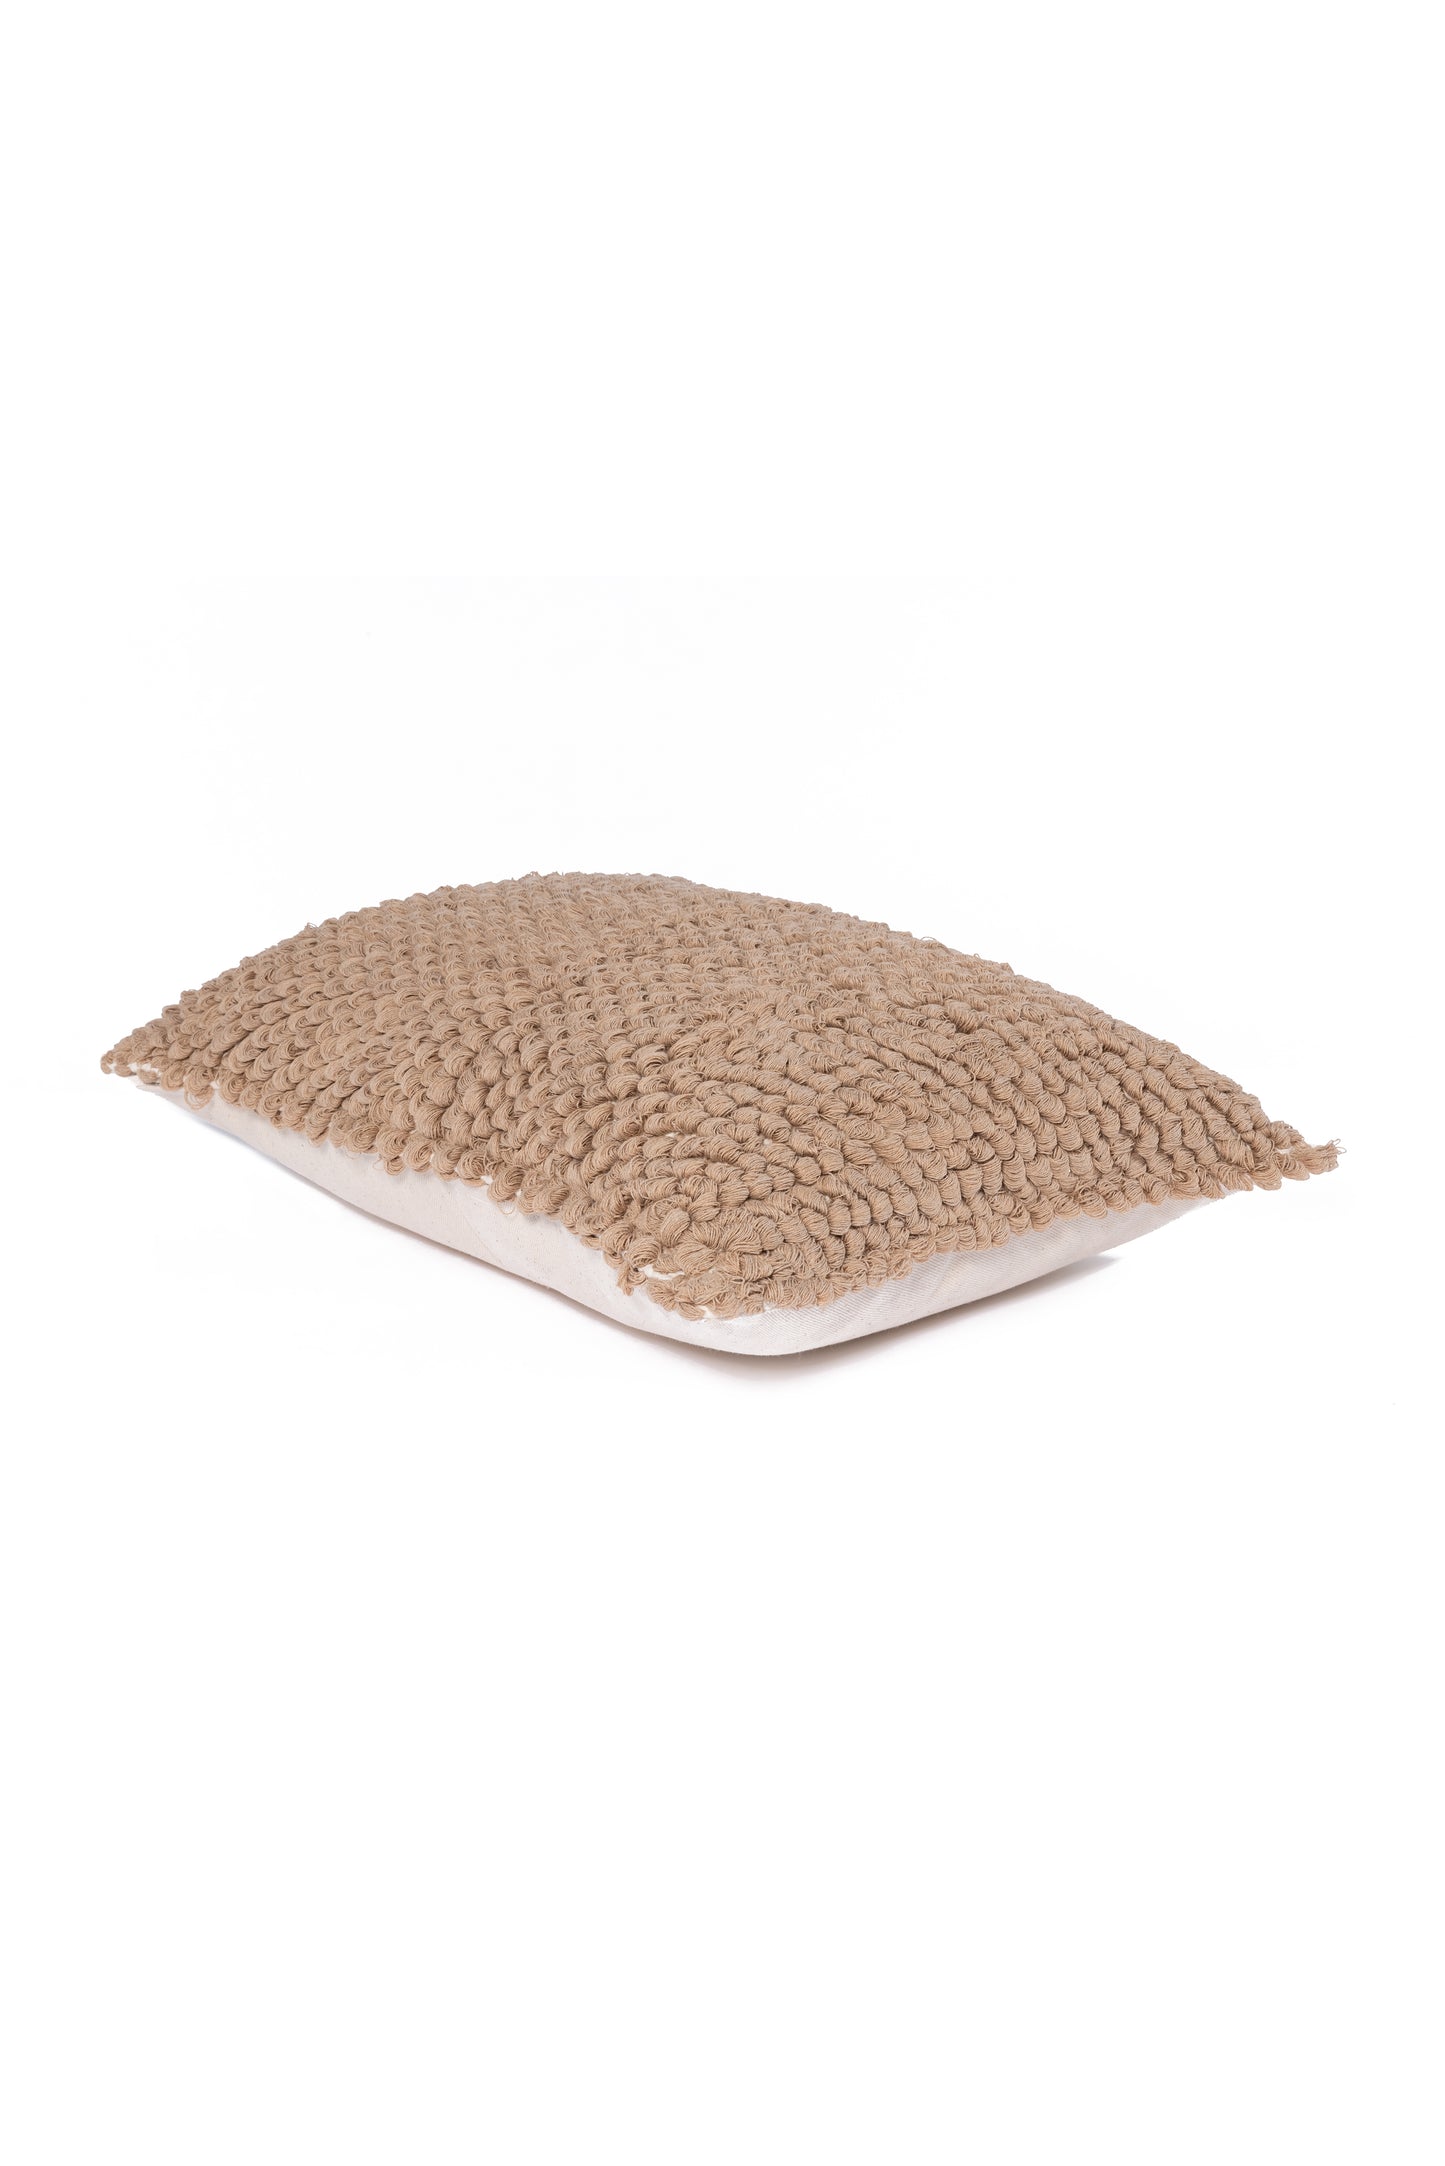 Pillow bundle - Earthy & Warm